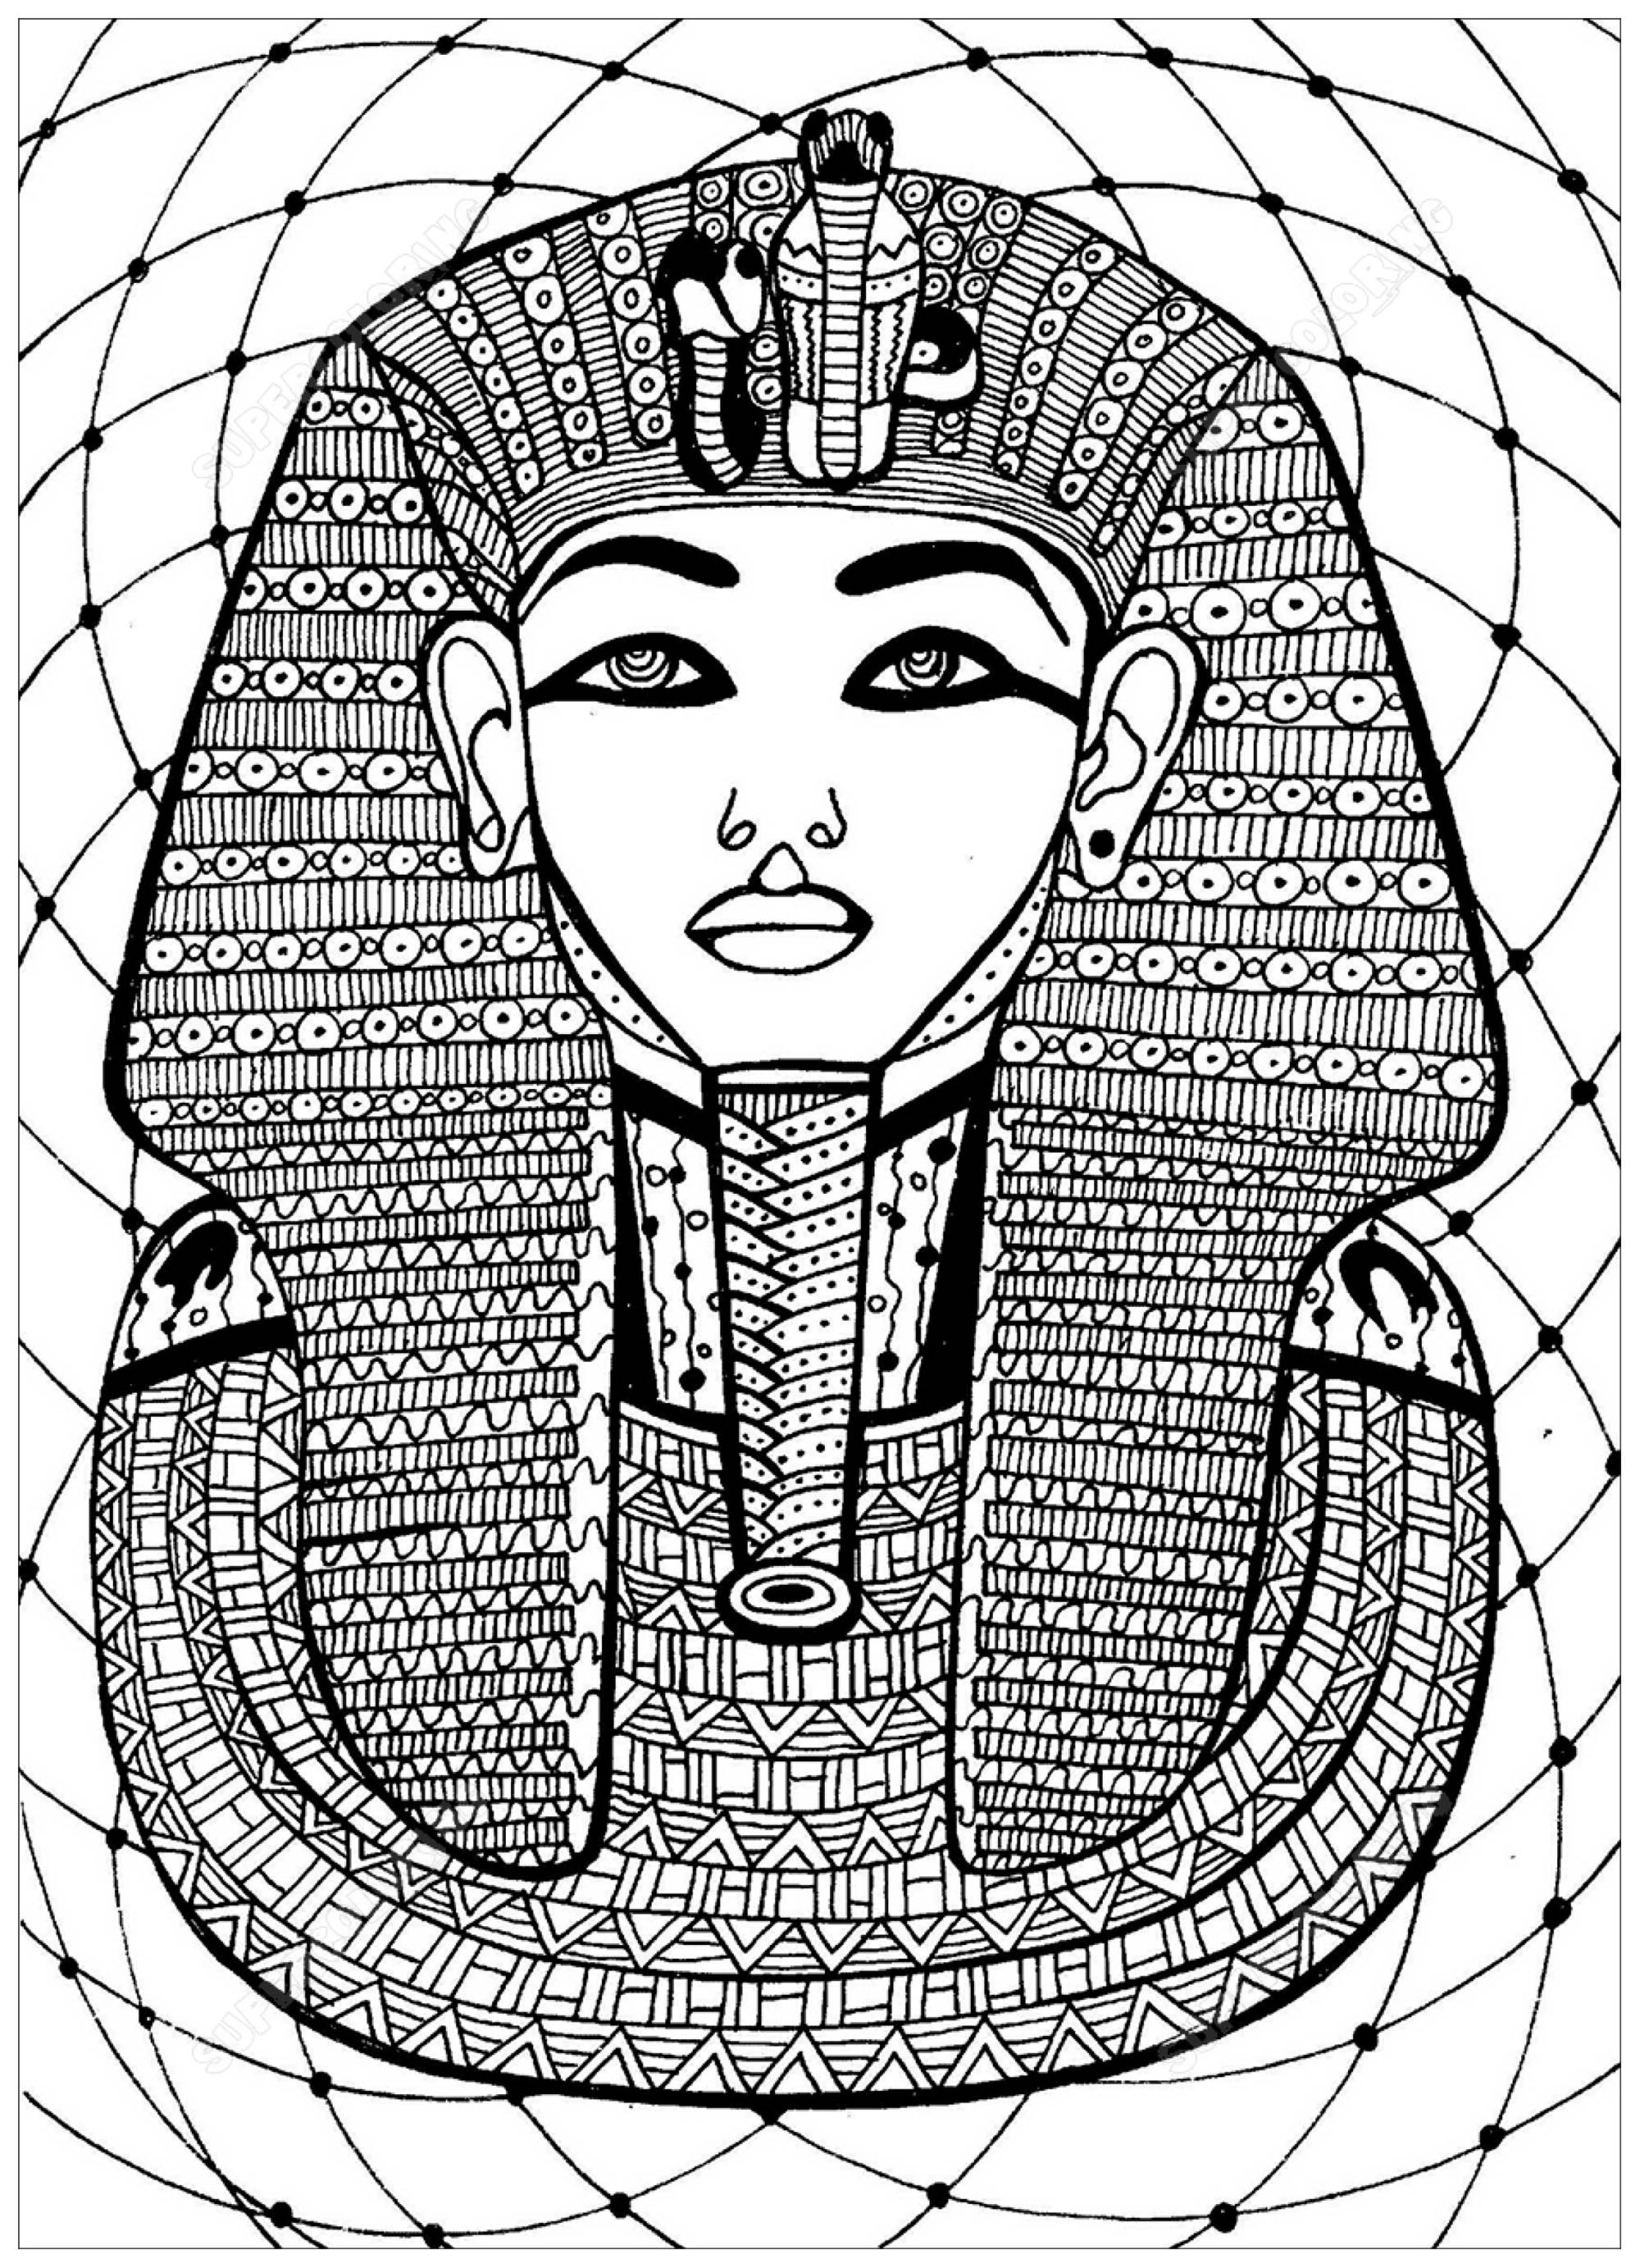 Pharaon, Artiste : Krivosheeva Olga (Ori Akuma)   Source : Supercoloring